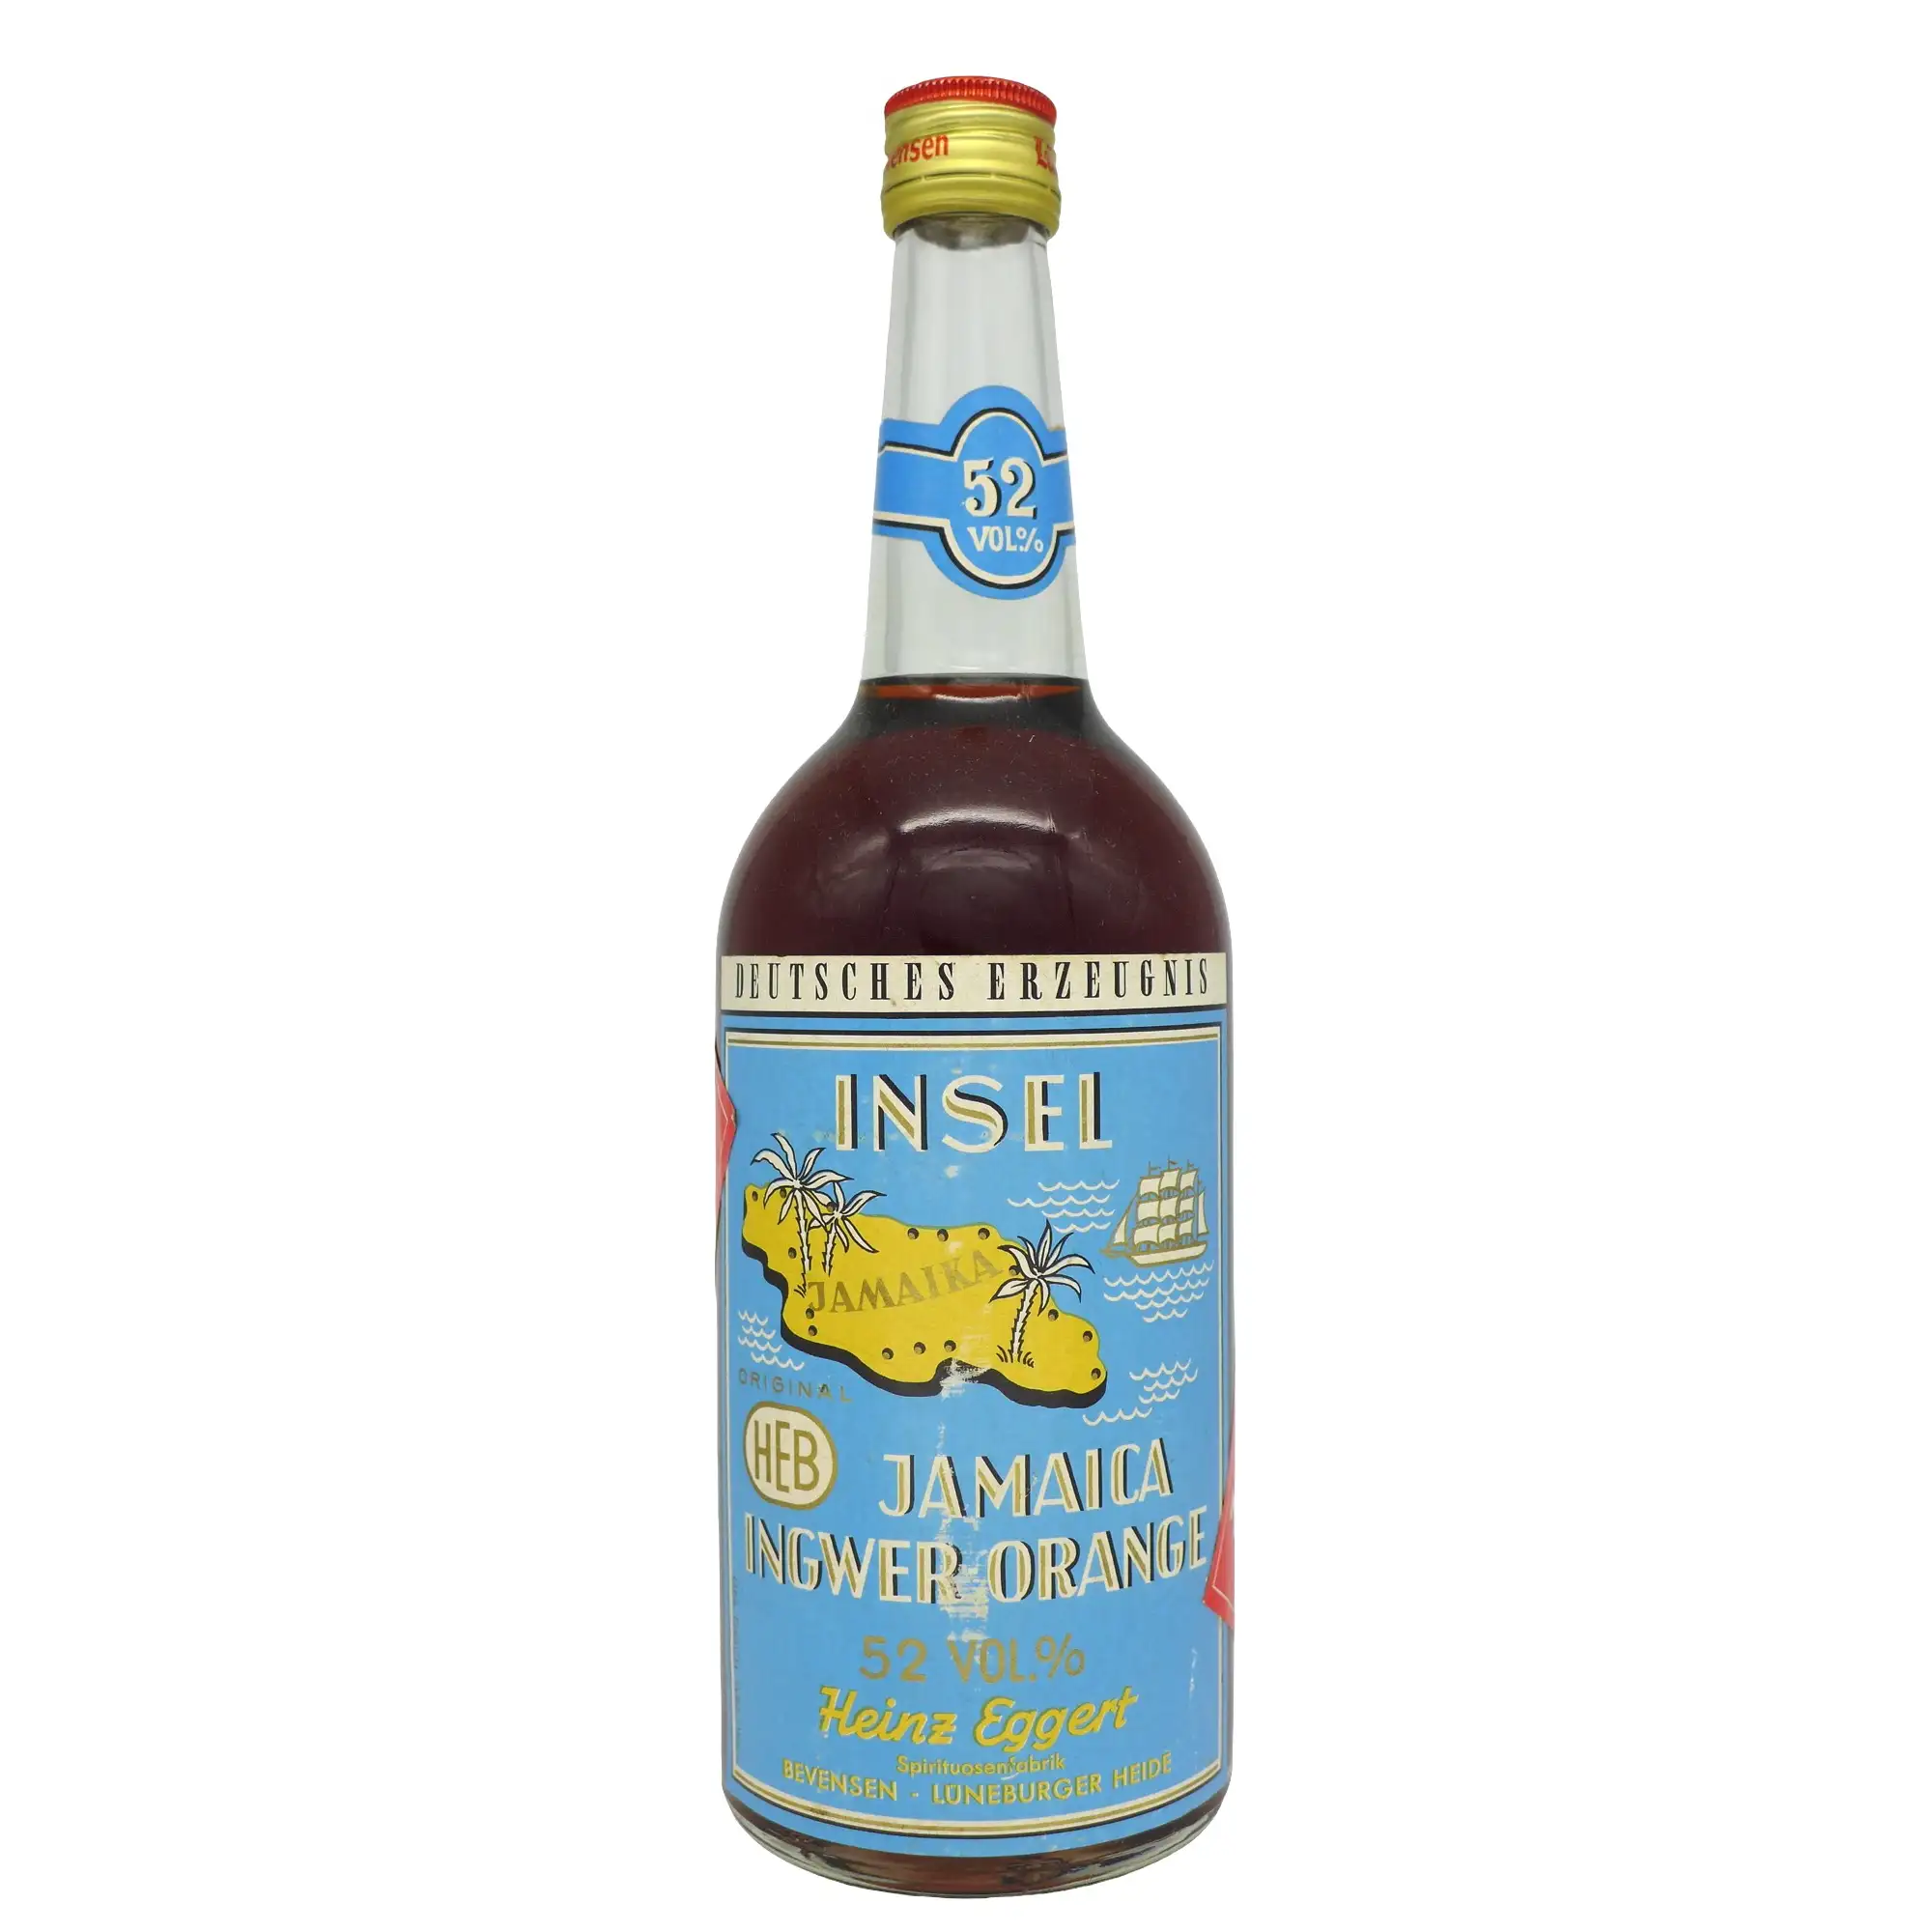 Image of the front of the bottle of the rum JAMINGO Jamaica Ingwer Orange